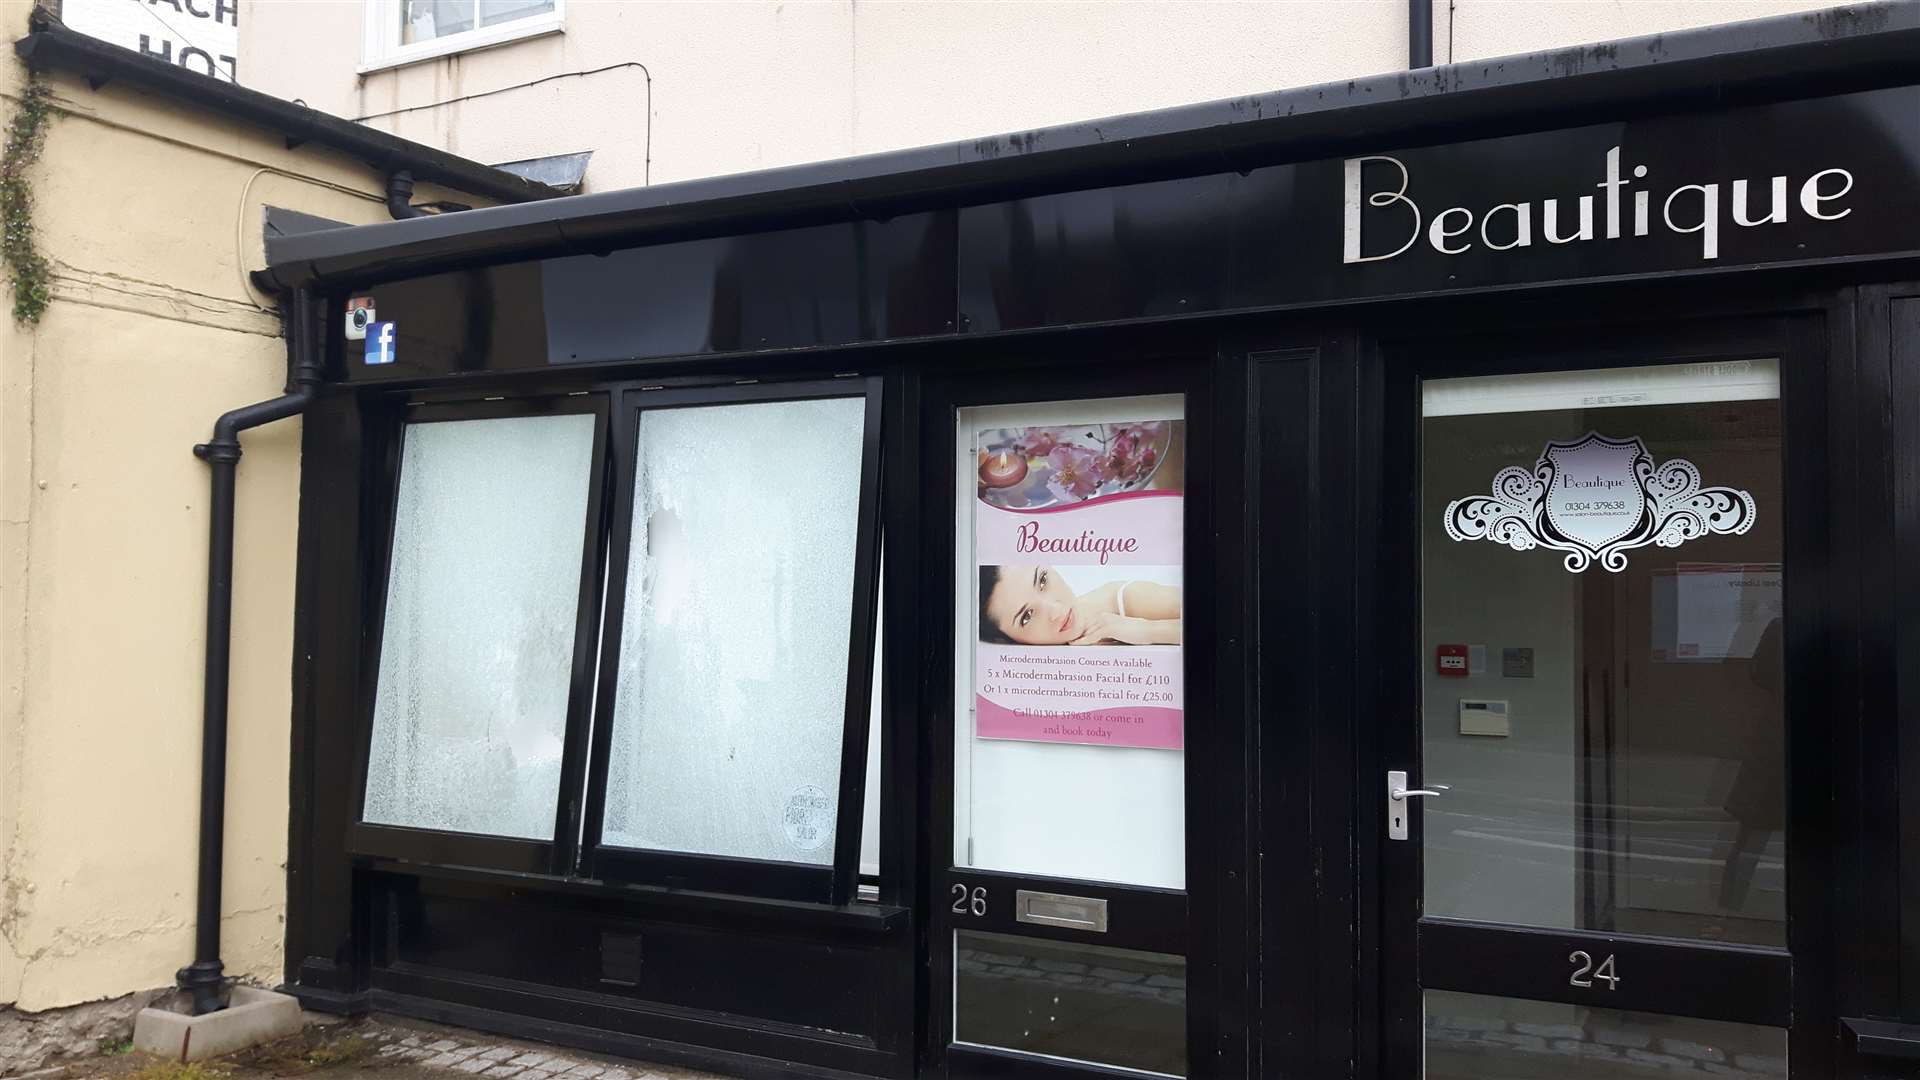 Beautique has been targeted by vandals